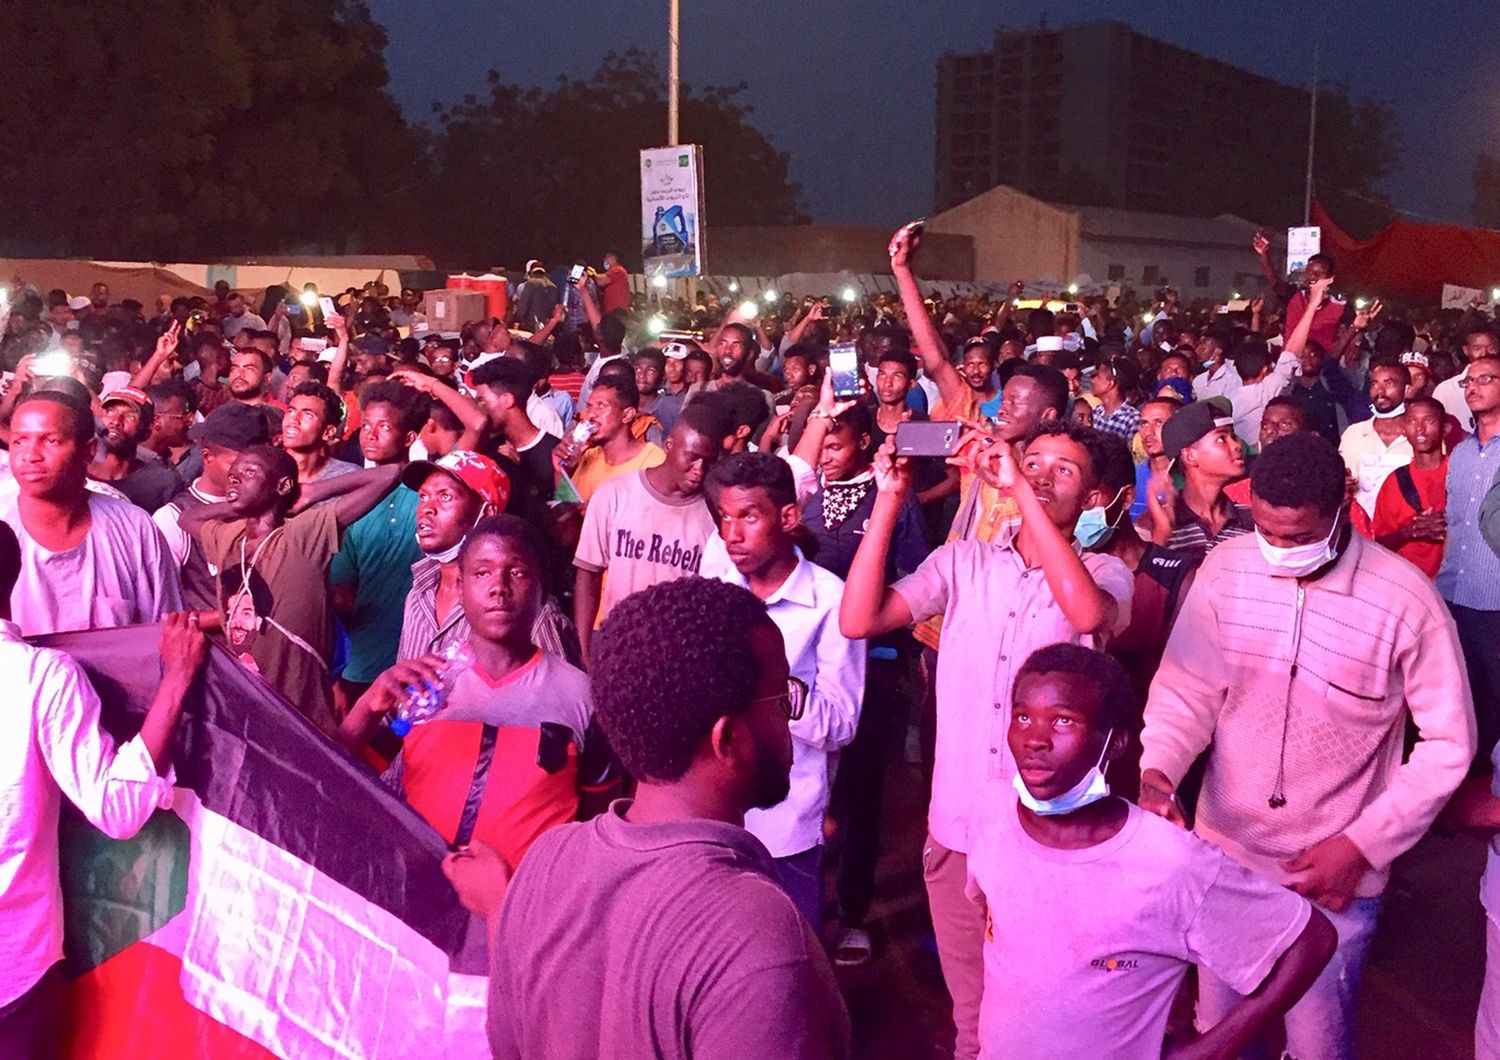 Proteste in Sudan